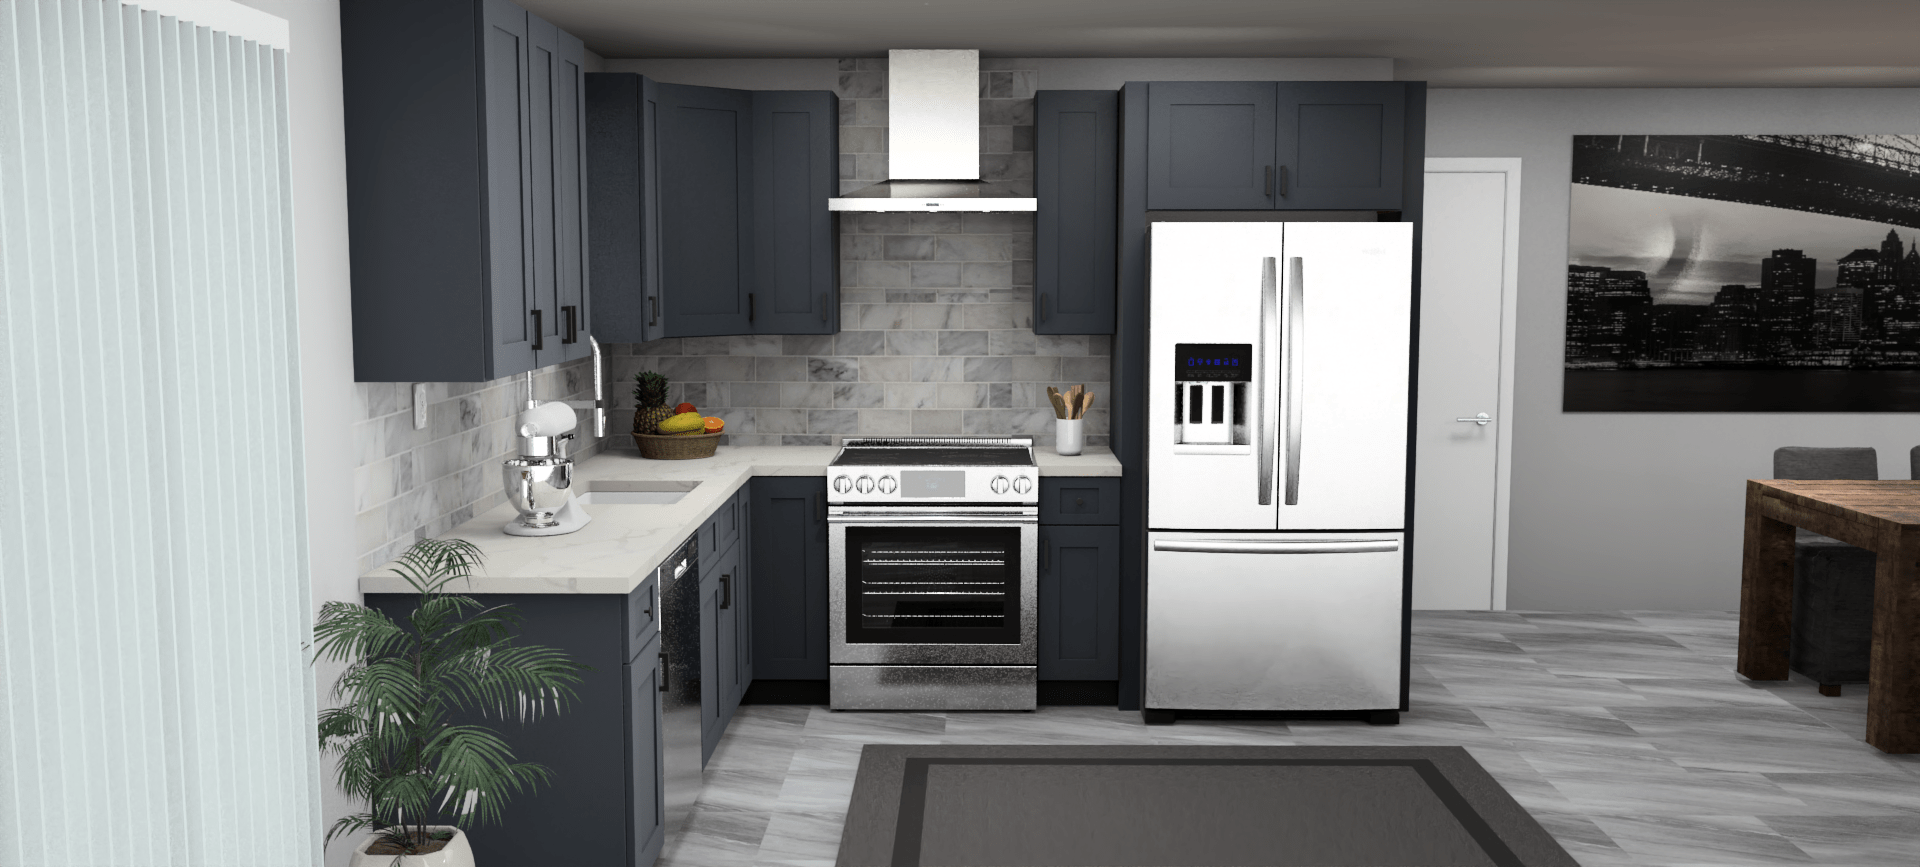 Fabuwood Allure Galaxy Indigo 9 x 10 L Shaped Kitchen Front Layout Photo